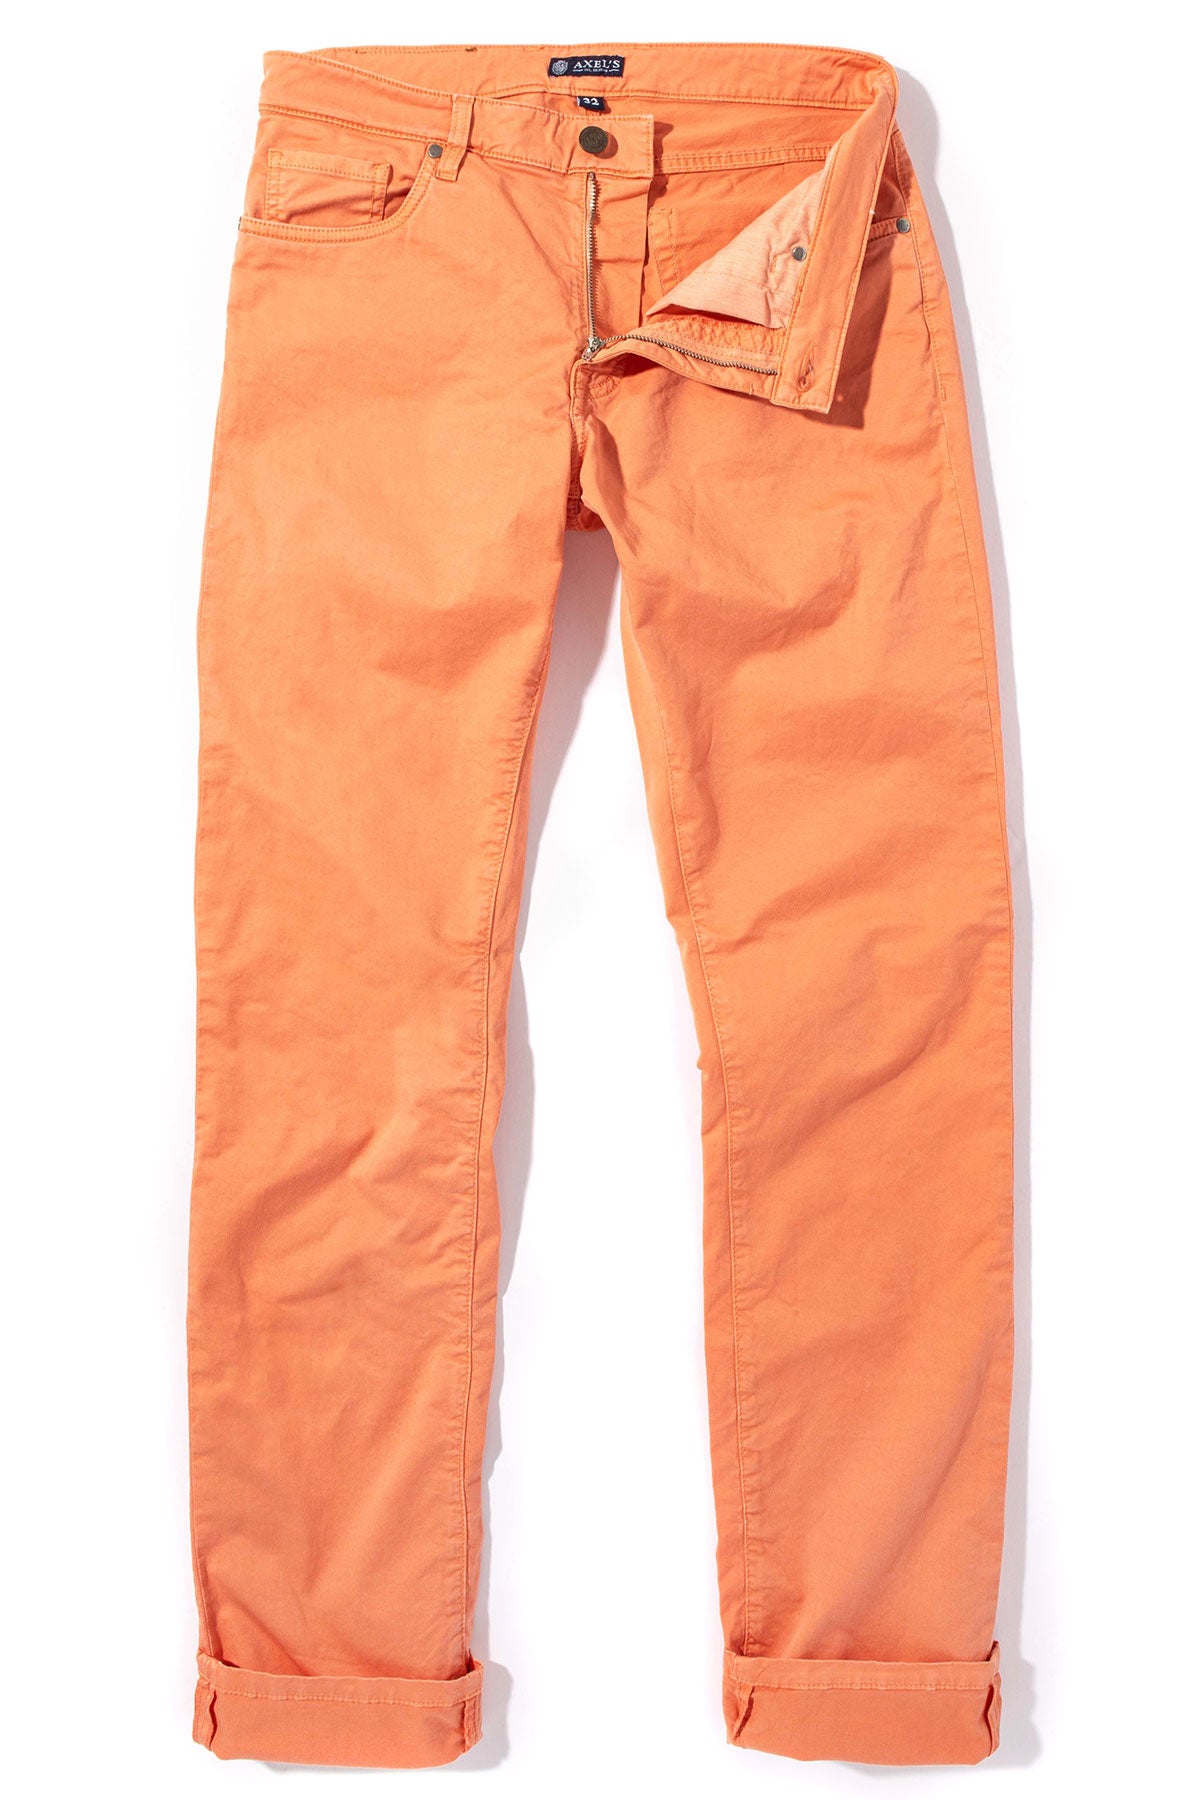 Flagstaff Stretch Cotton Twill in Tangerine | Mens - Pants - 5 Pocket | Axels Premium Denim